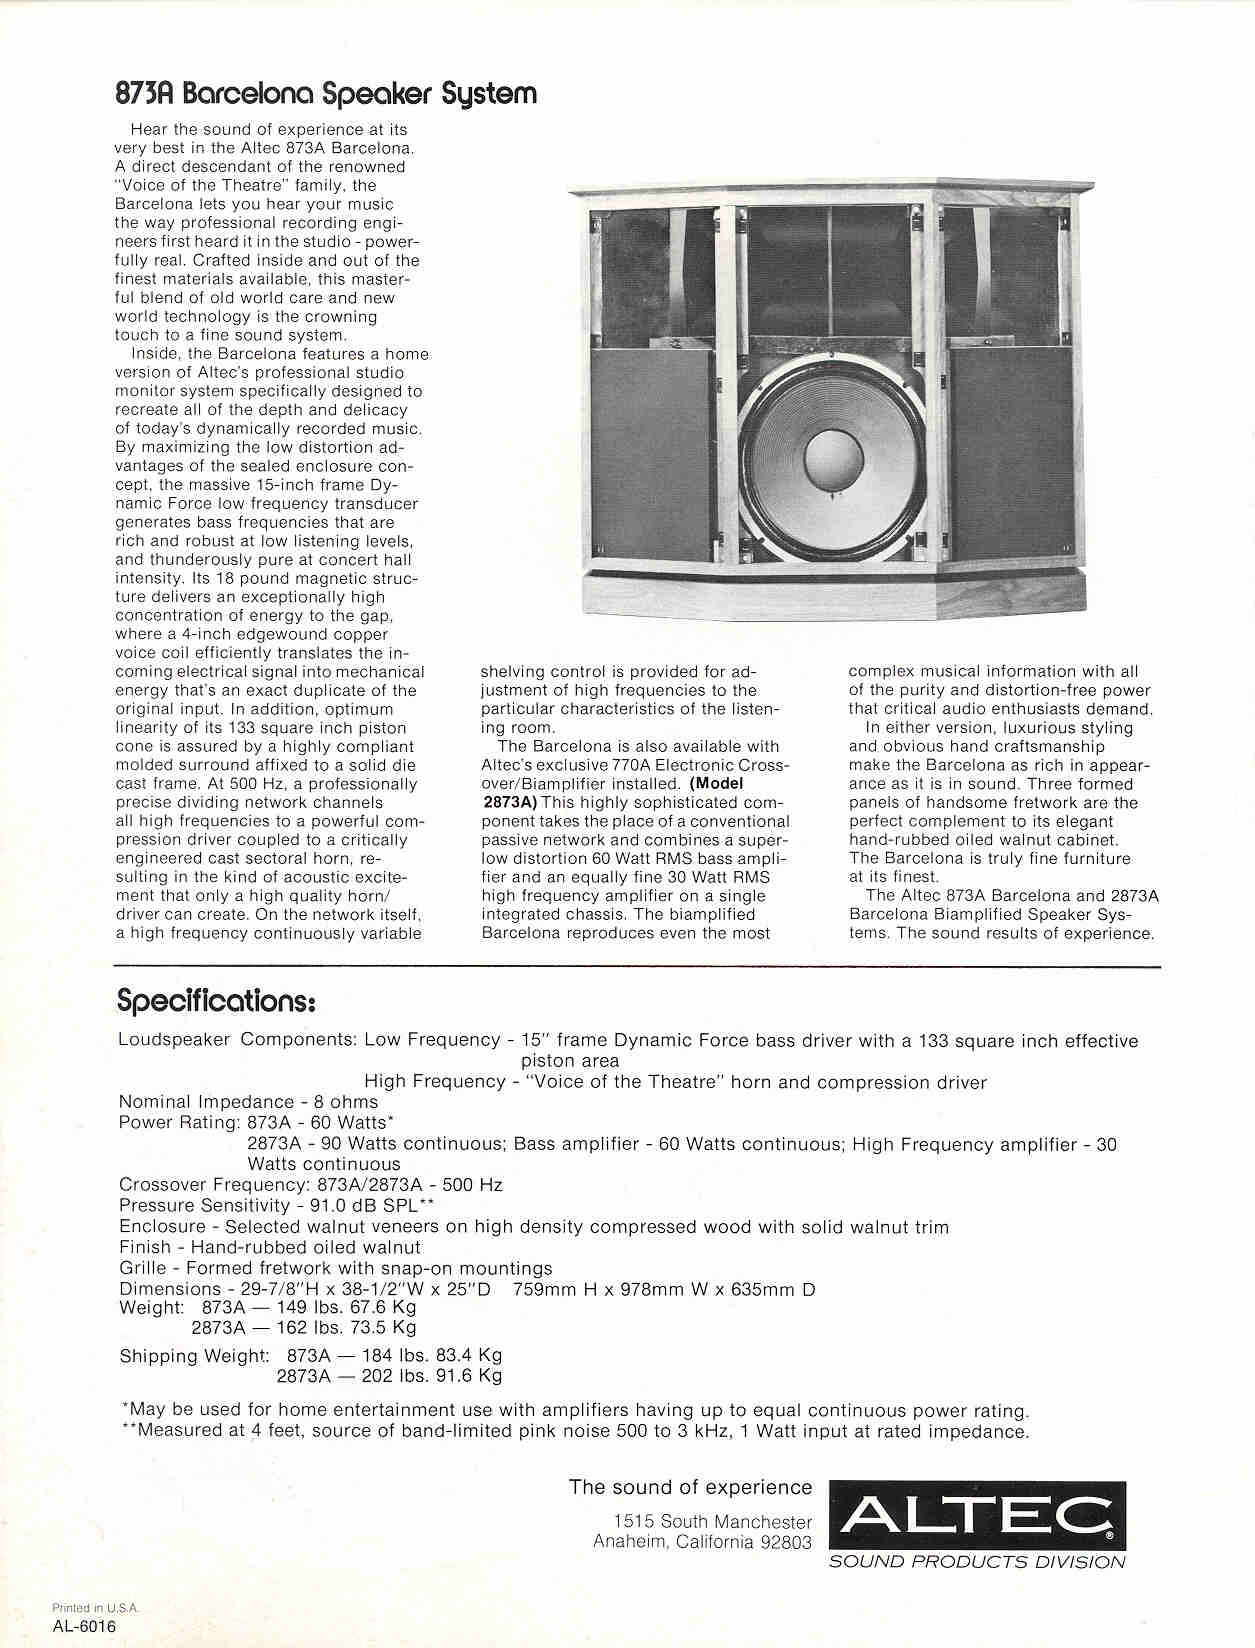 Altec Lansing 873 A-Prospekt-19711.jpg